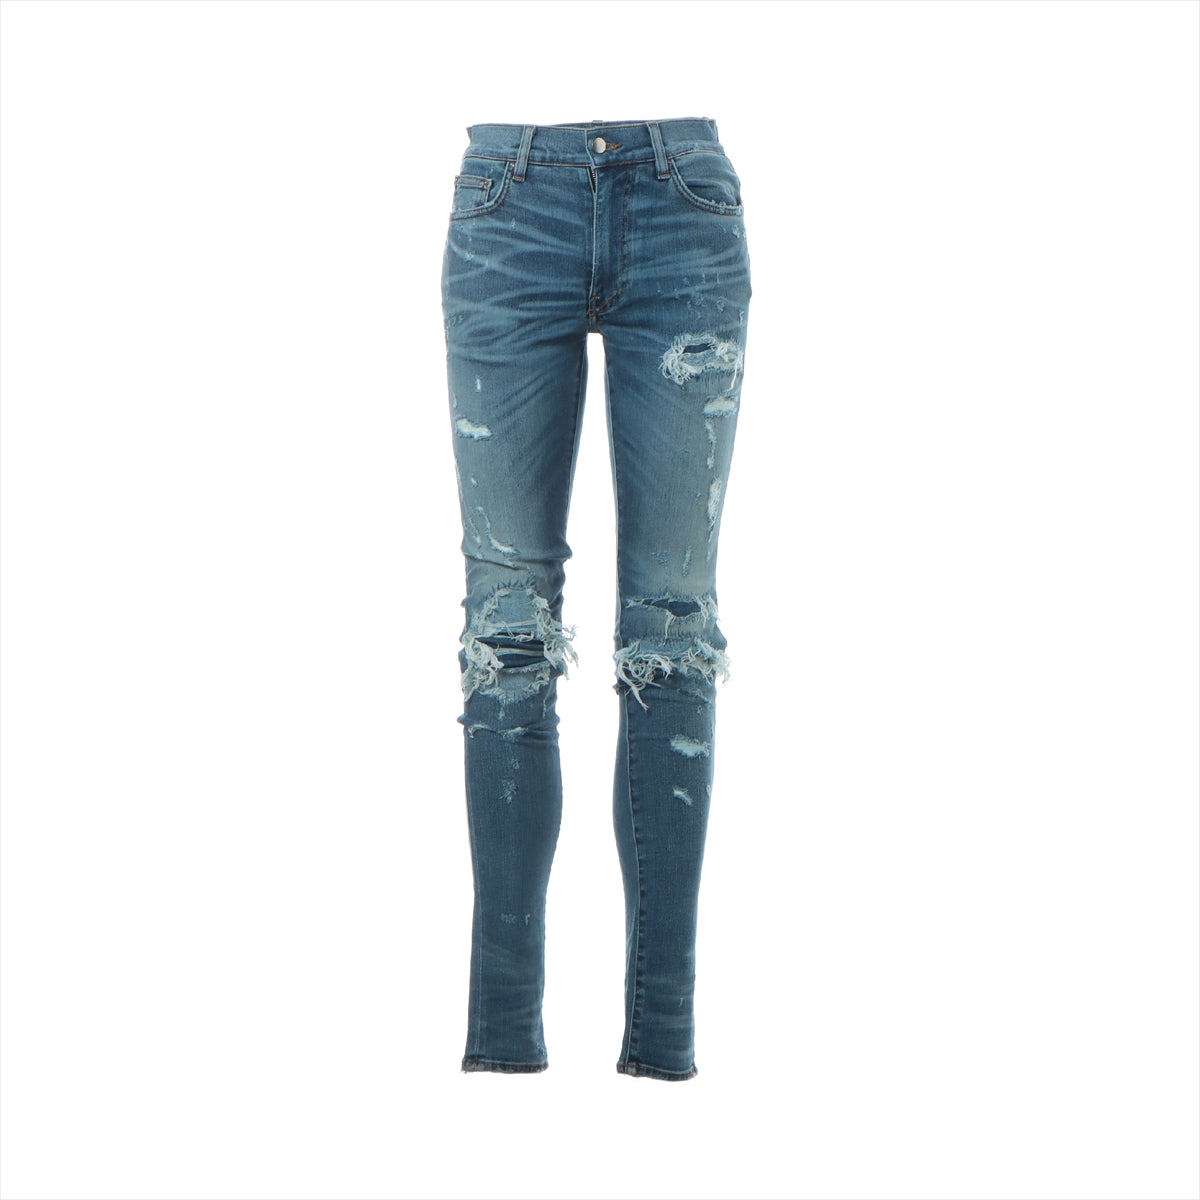 AMIRI Cotton & polyurethane Denim pants 29 Men's Blue  91-231-41-111594 Crash processing